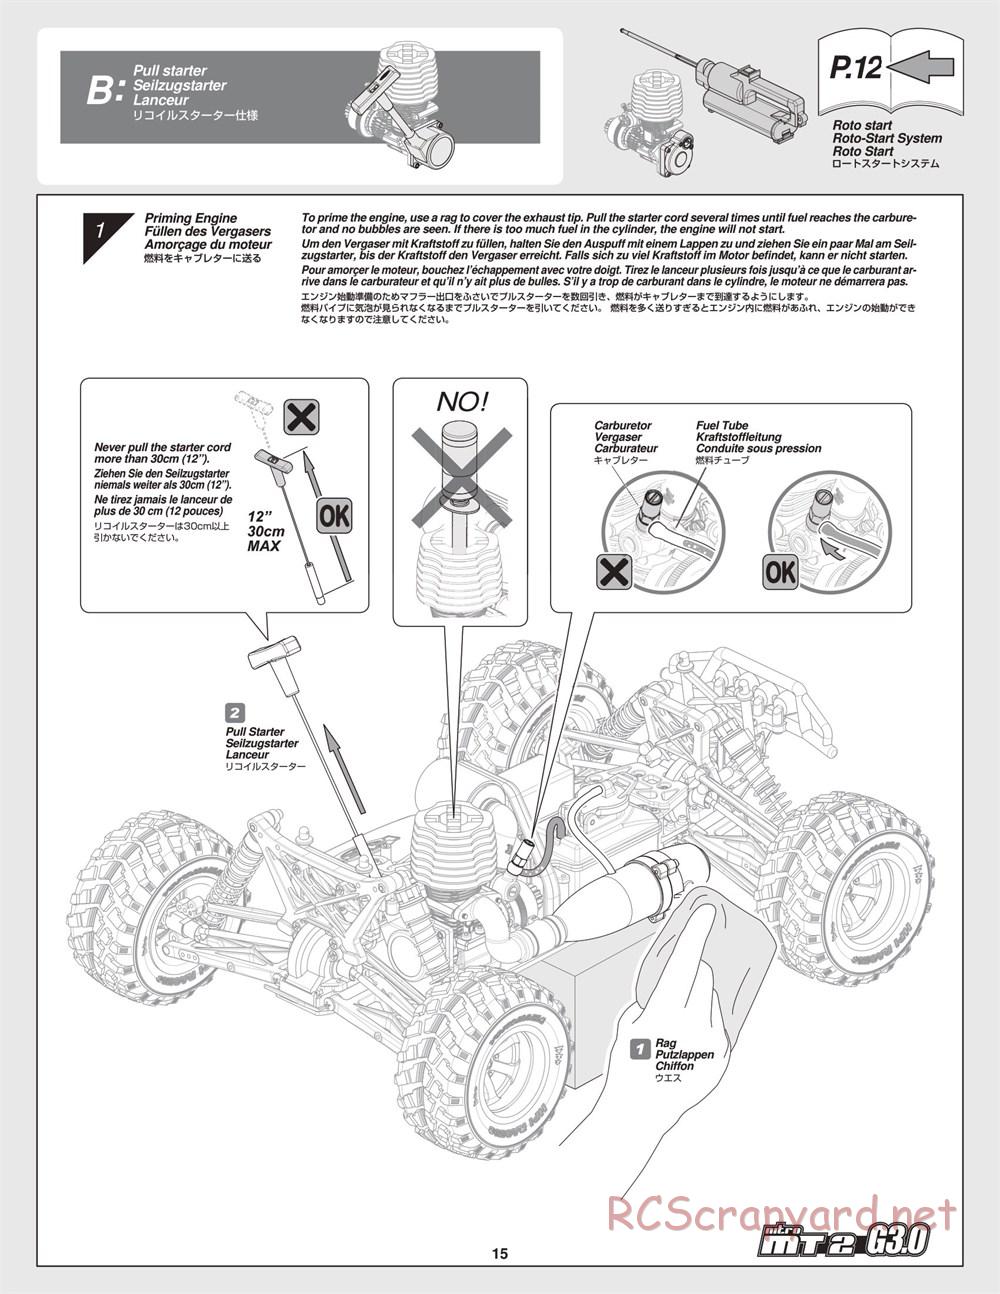 HPI - Nitro MT2 G3.0 - Manual - Page 15